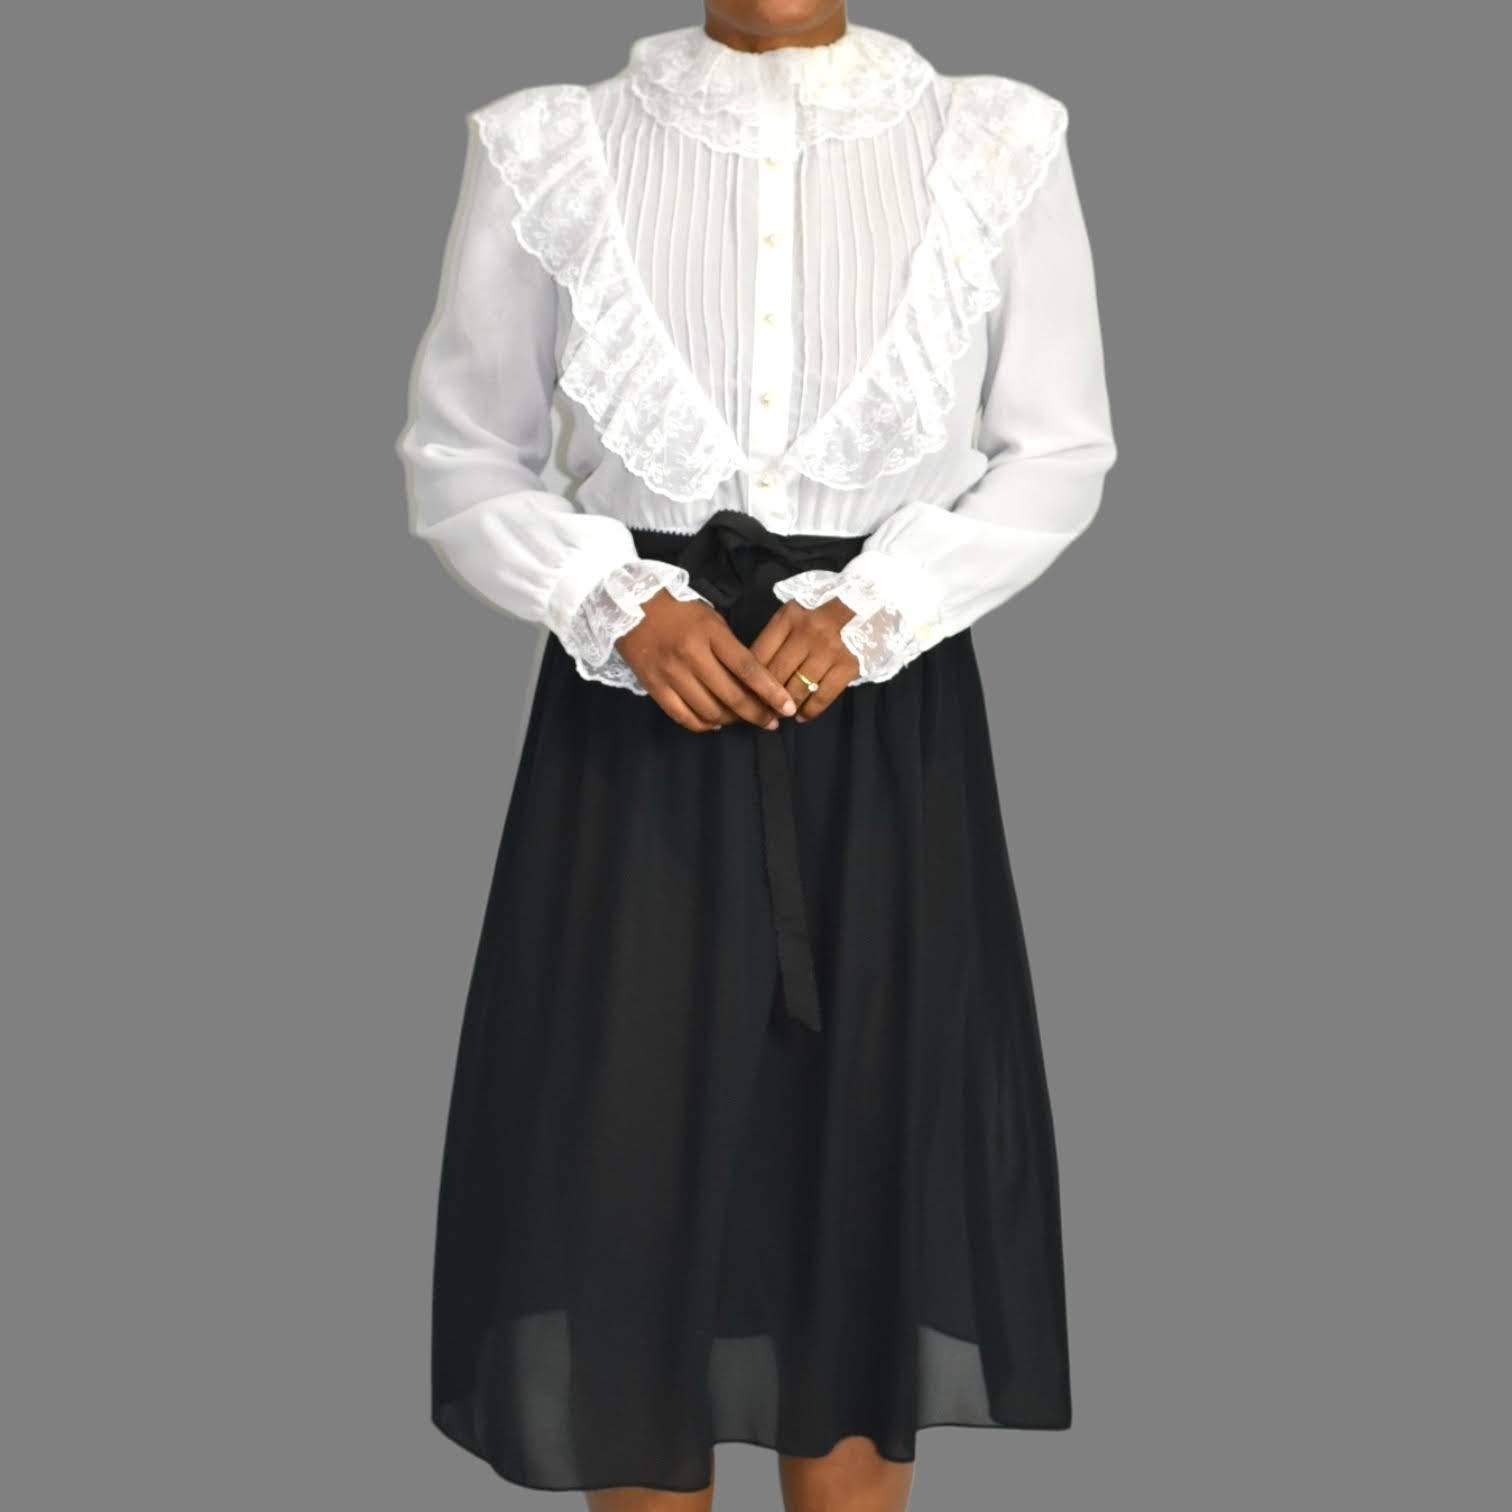 Vintage Act I Victorian Dress White Black Ruffle Lace Size Small Midi Prairie 80s USA Size Small